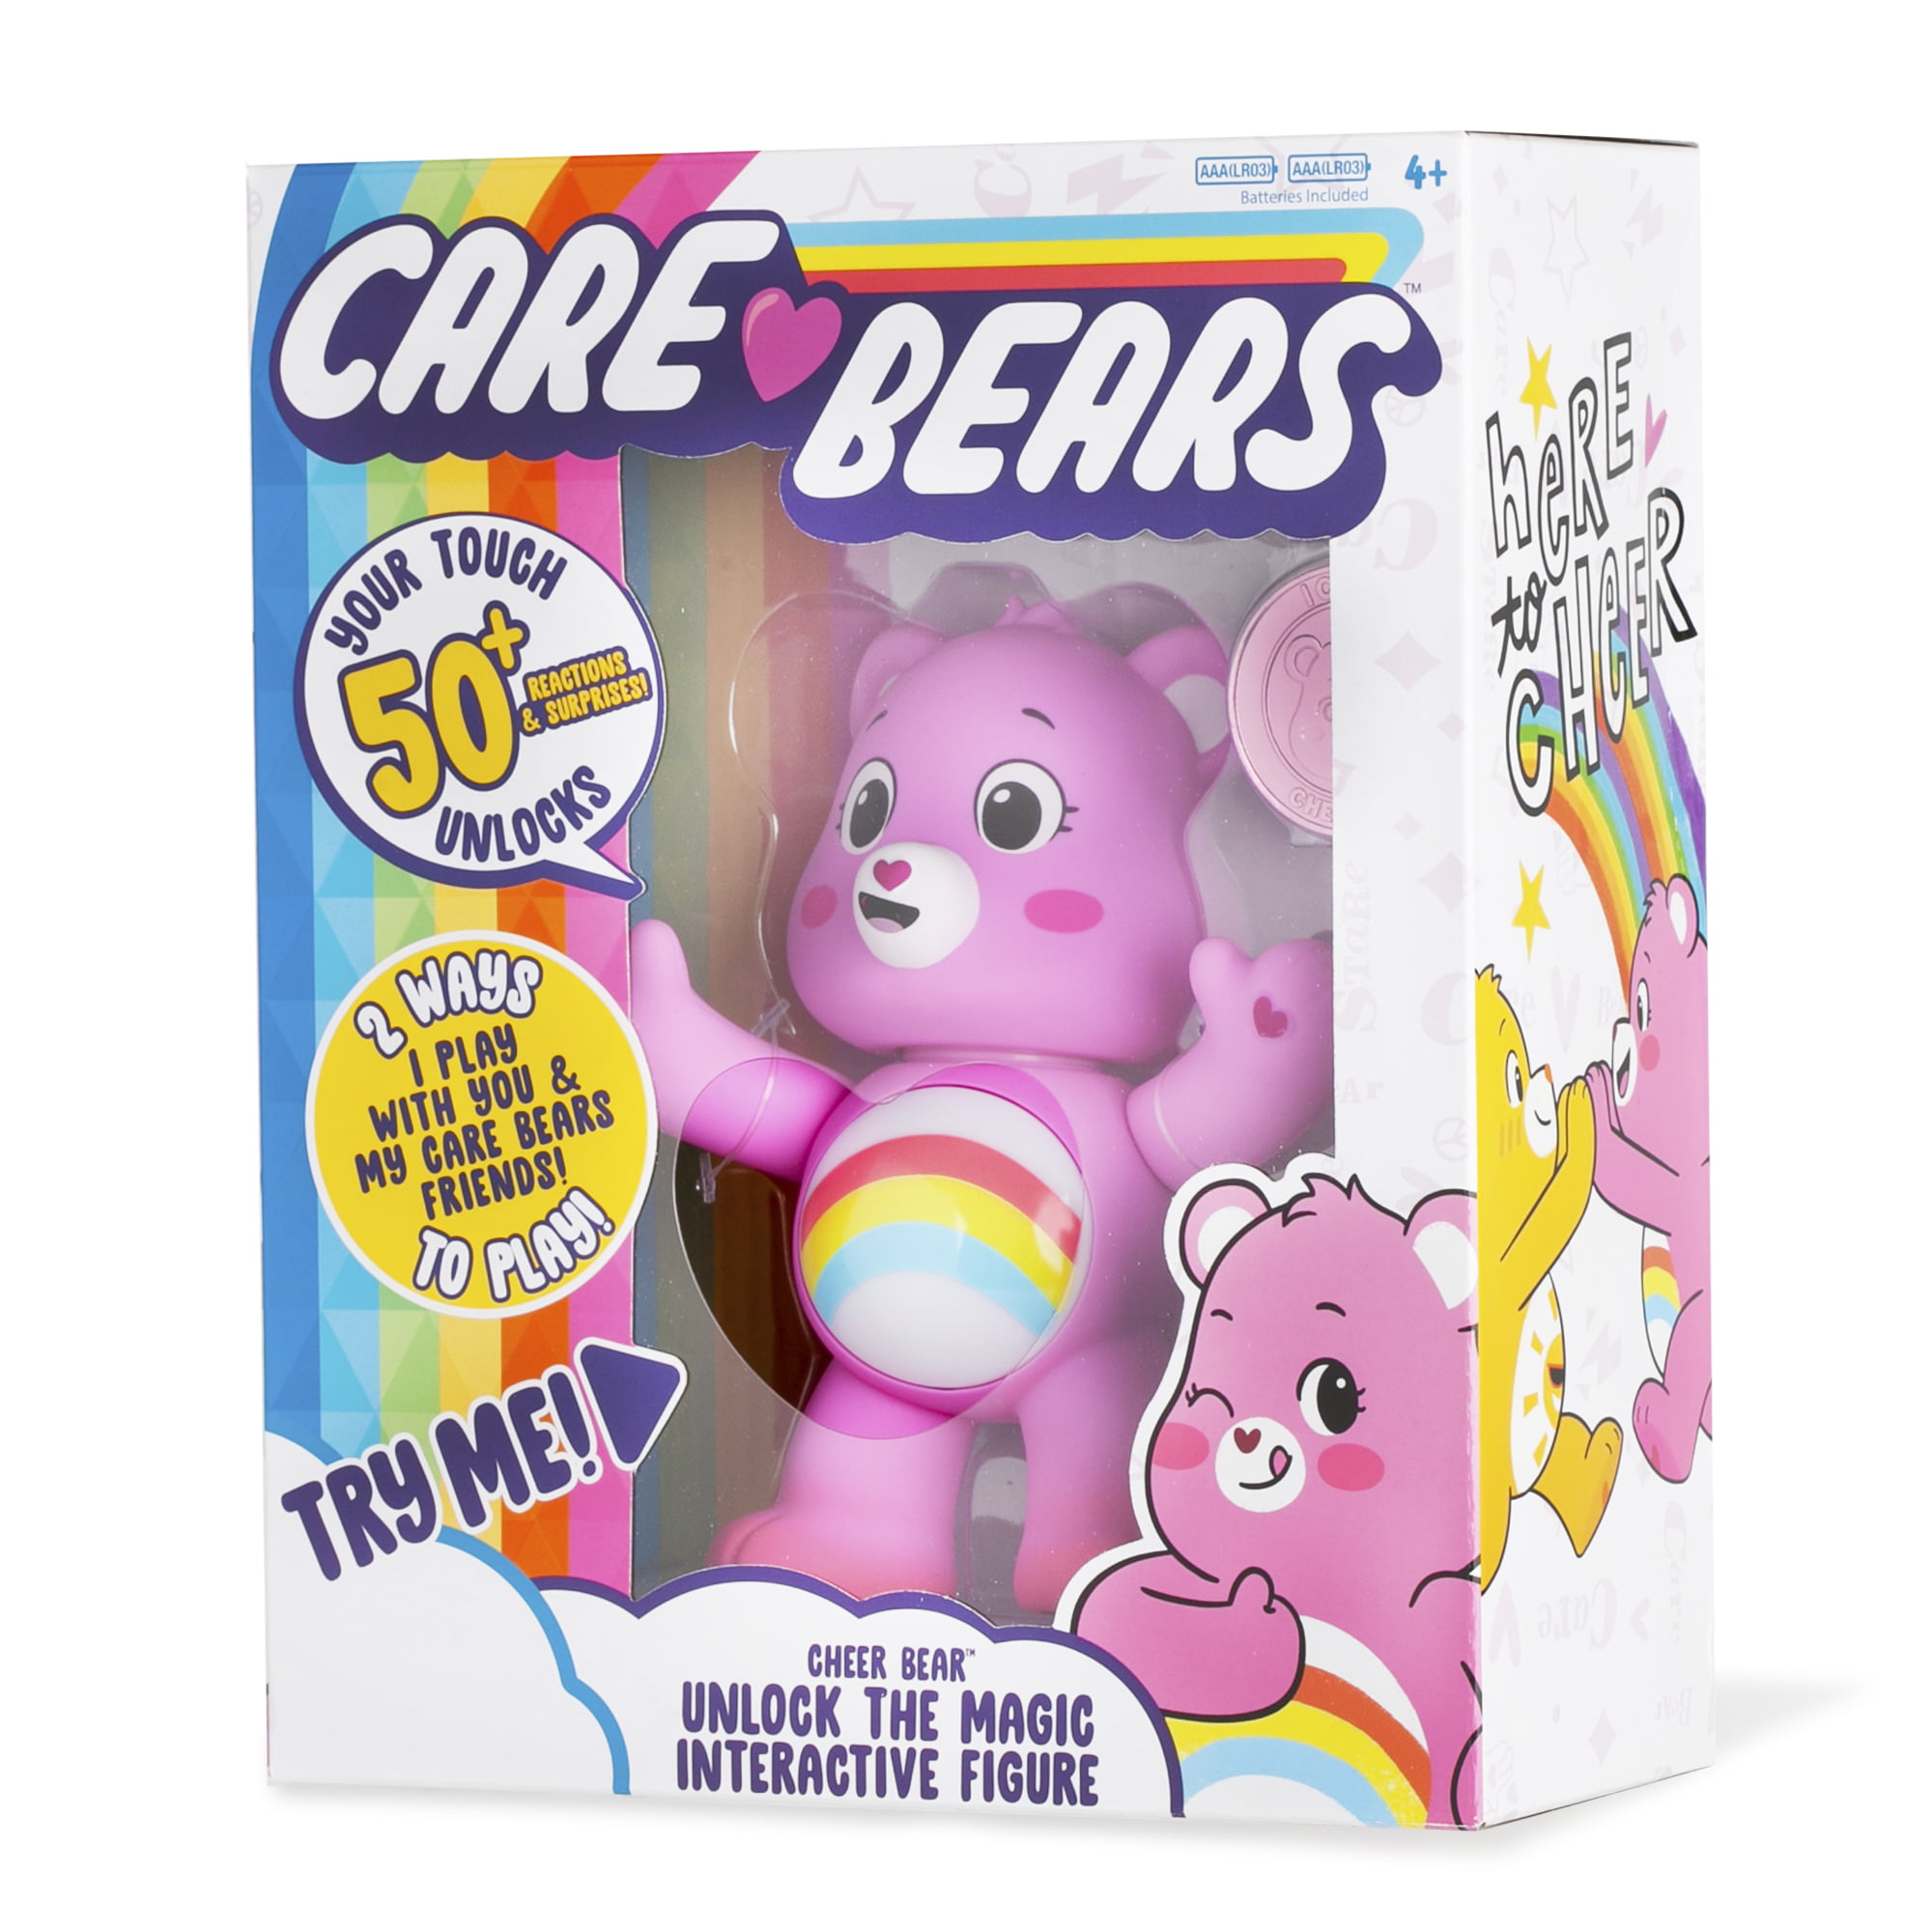 New Care Bears 5 Interactive Figure Cheer Bear Your Touch Unlocks 50 Reactions Surprises Walmart Com Walmart Com